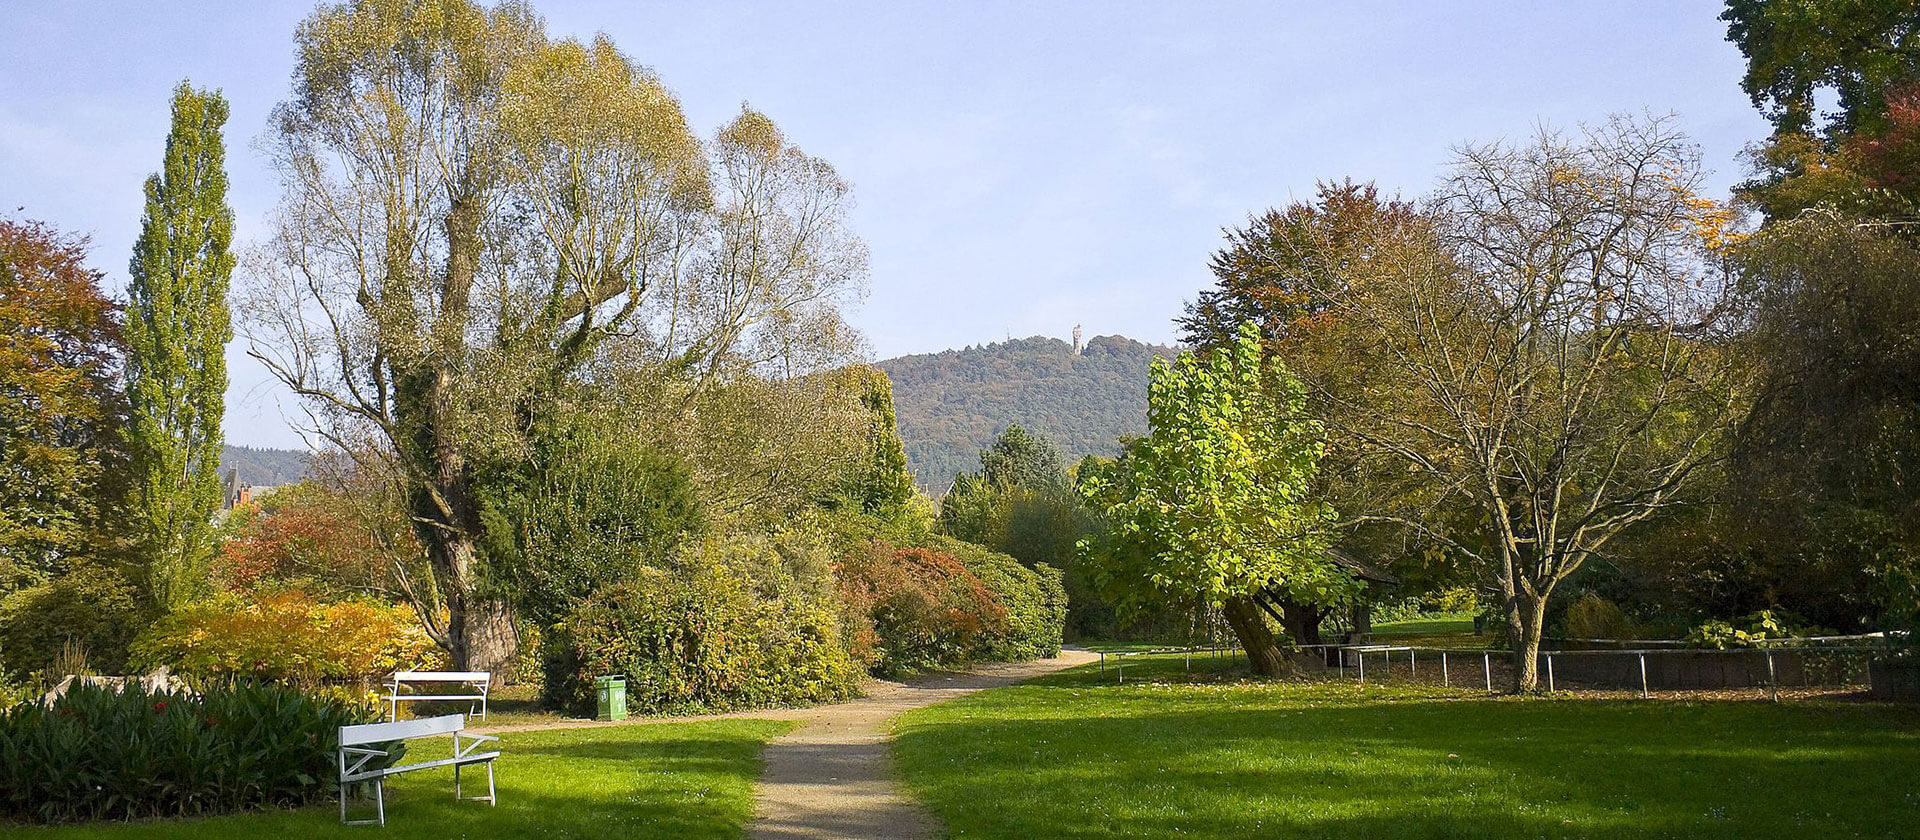 Alter Botanischer Garten Marburg, Credit Willow via Wikimedia